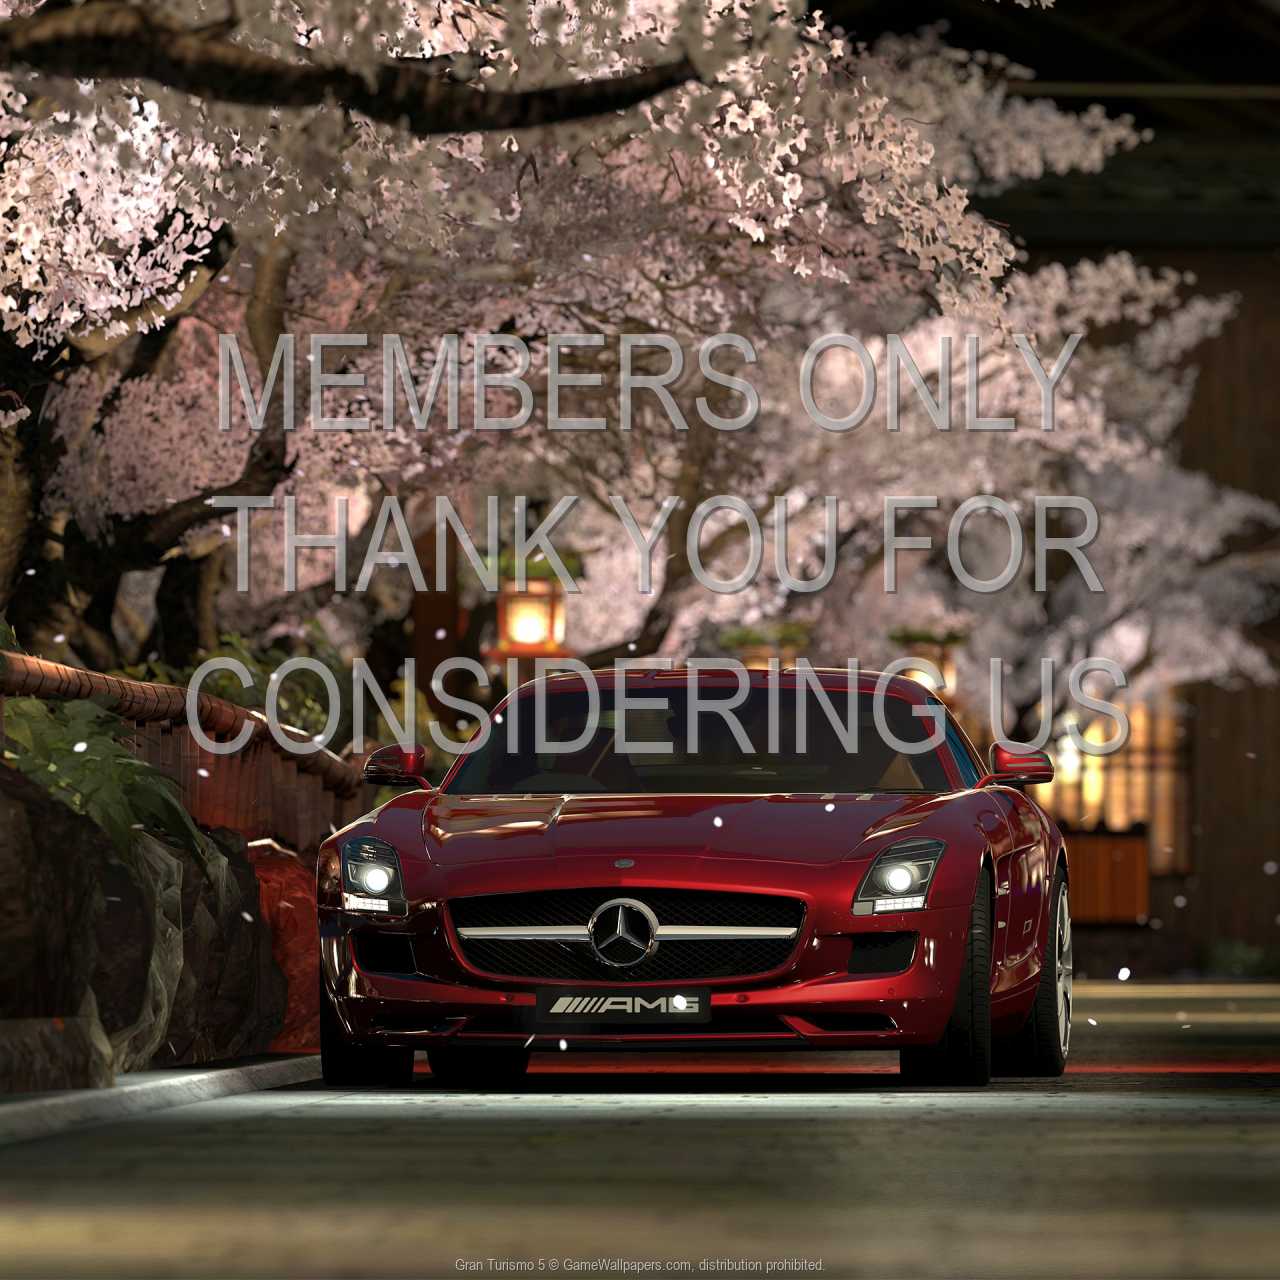 Gran Turismo 5 720p Horizontal Mobile wallpaper or background 16